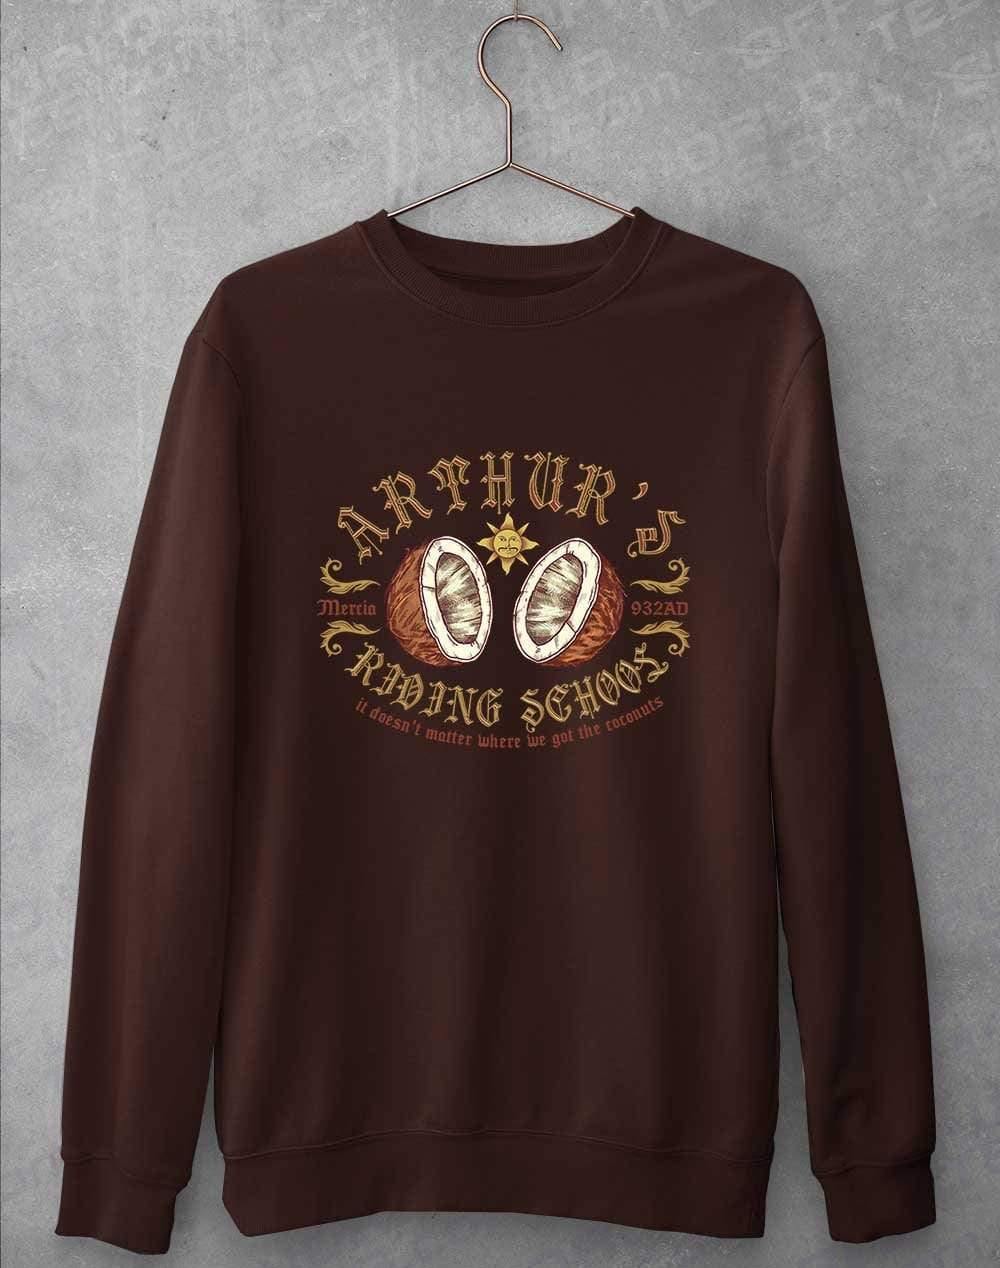 King Arthur's Riding School Sweatshirt S / Hot Chocolate  - Off World Tees